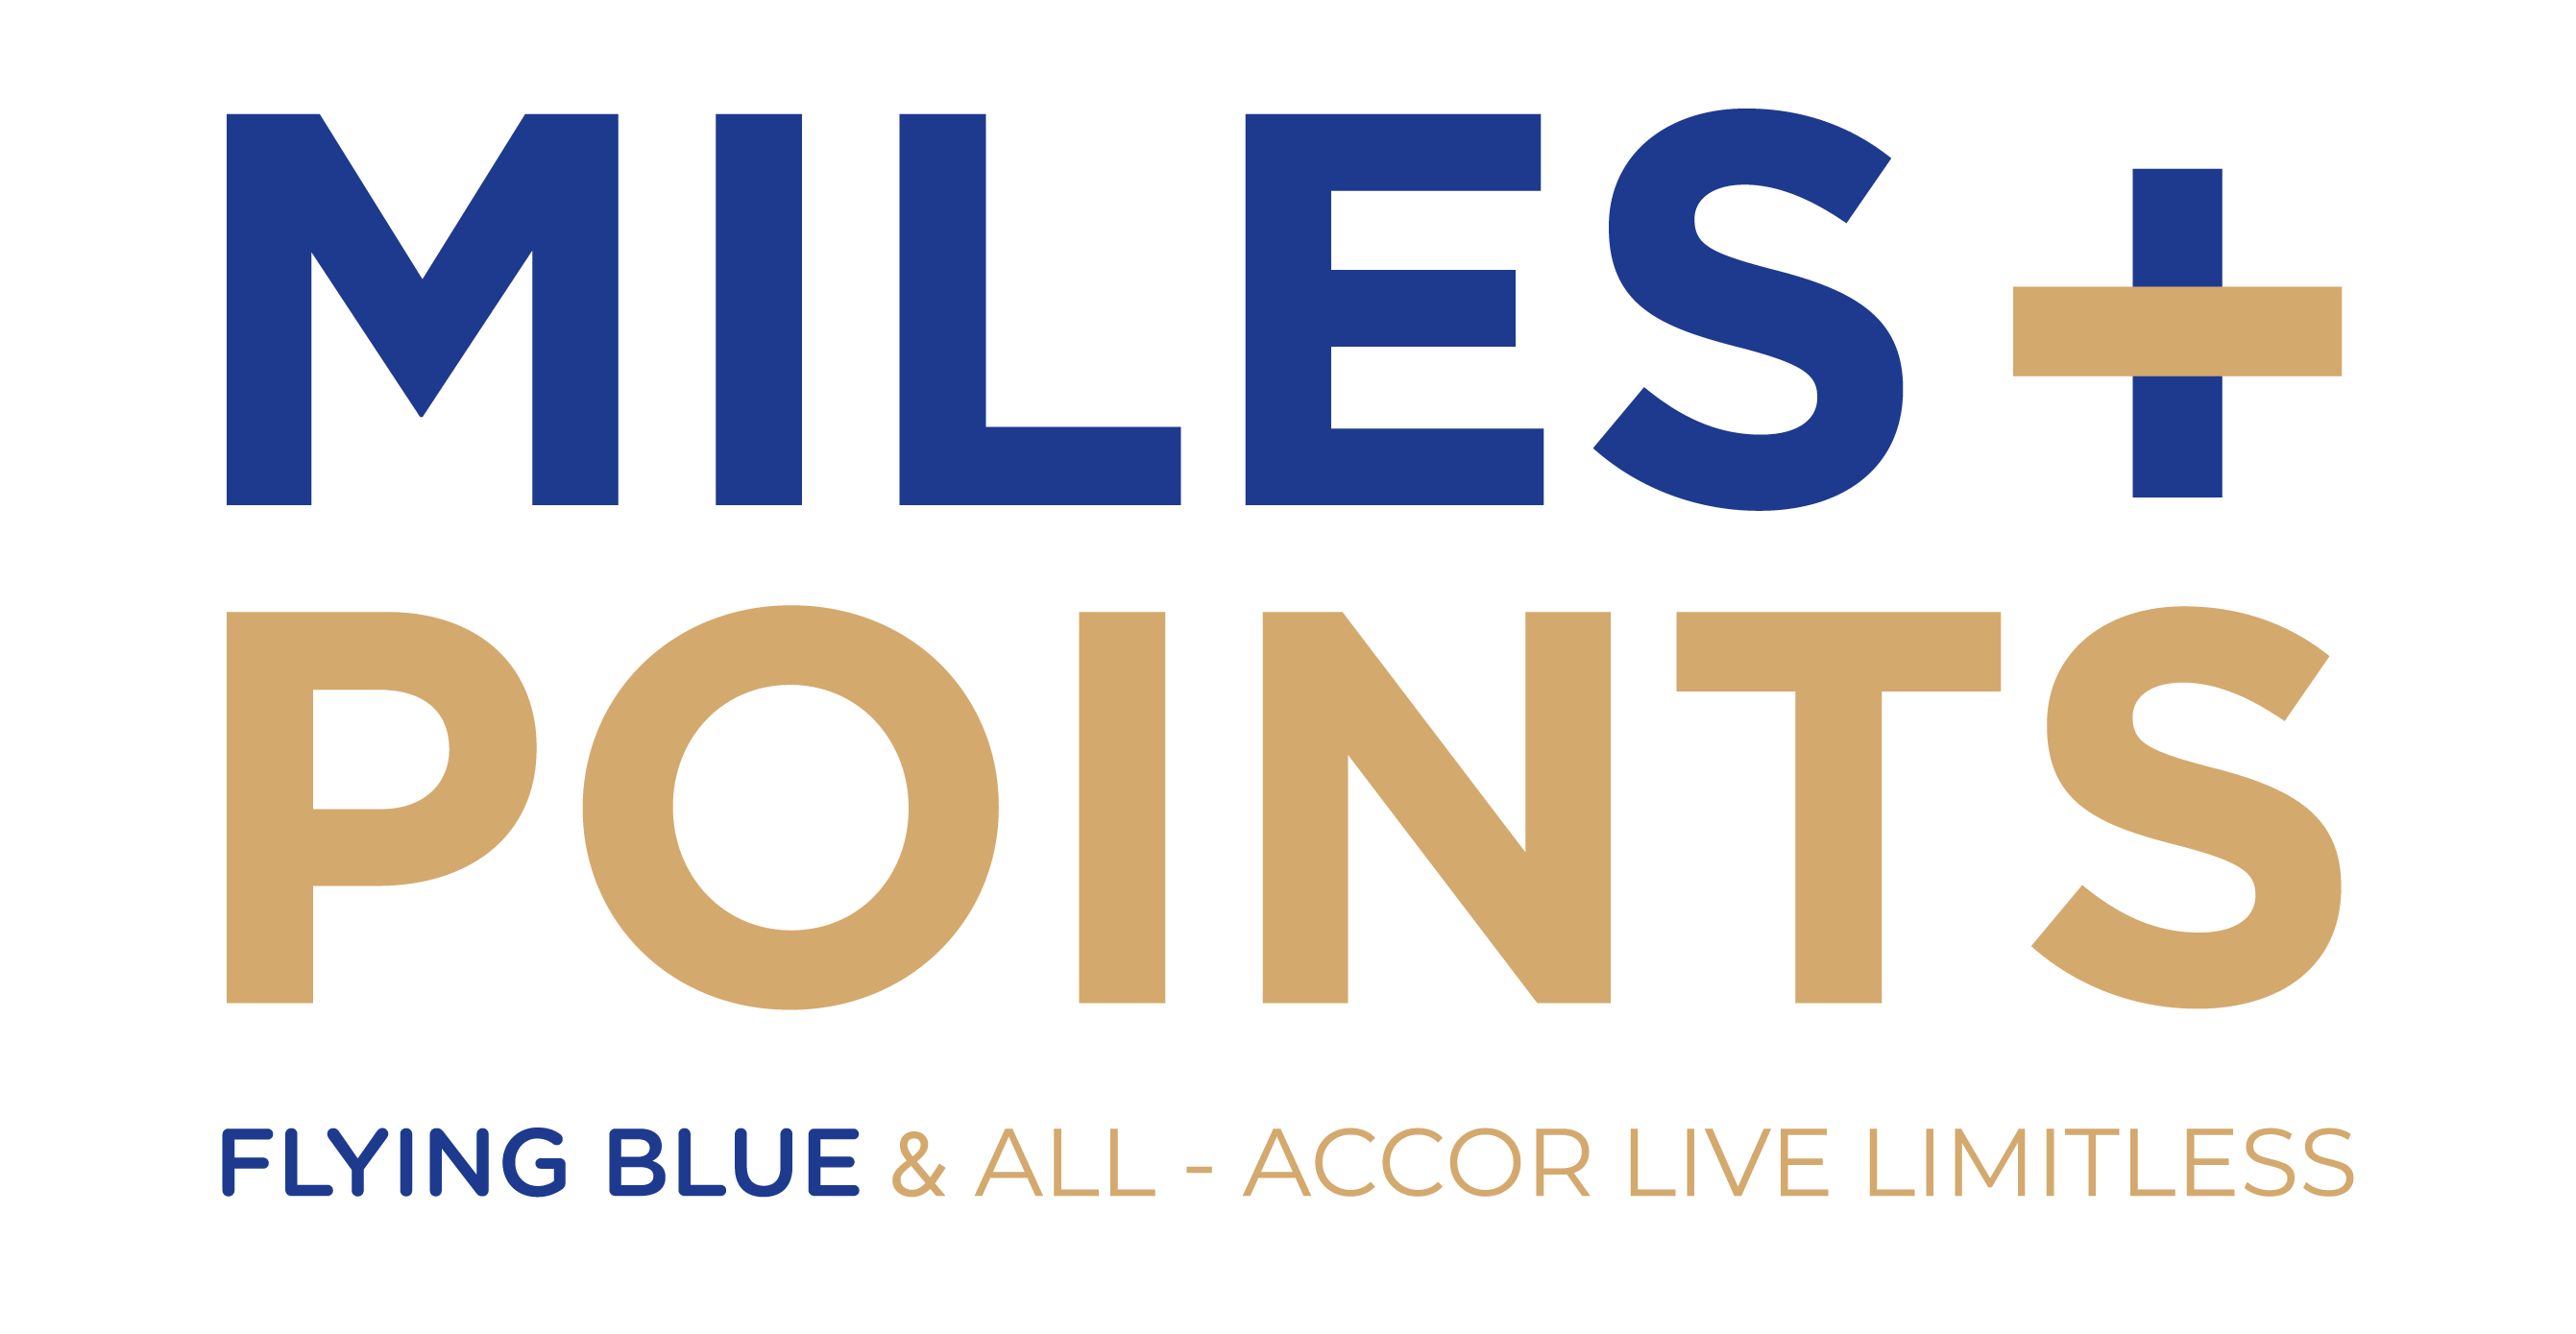 Miles + points